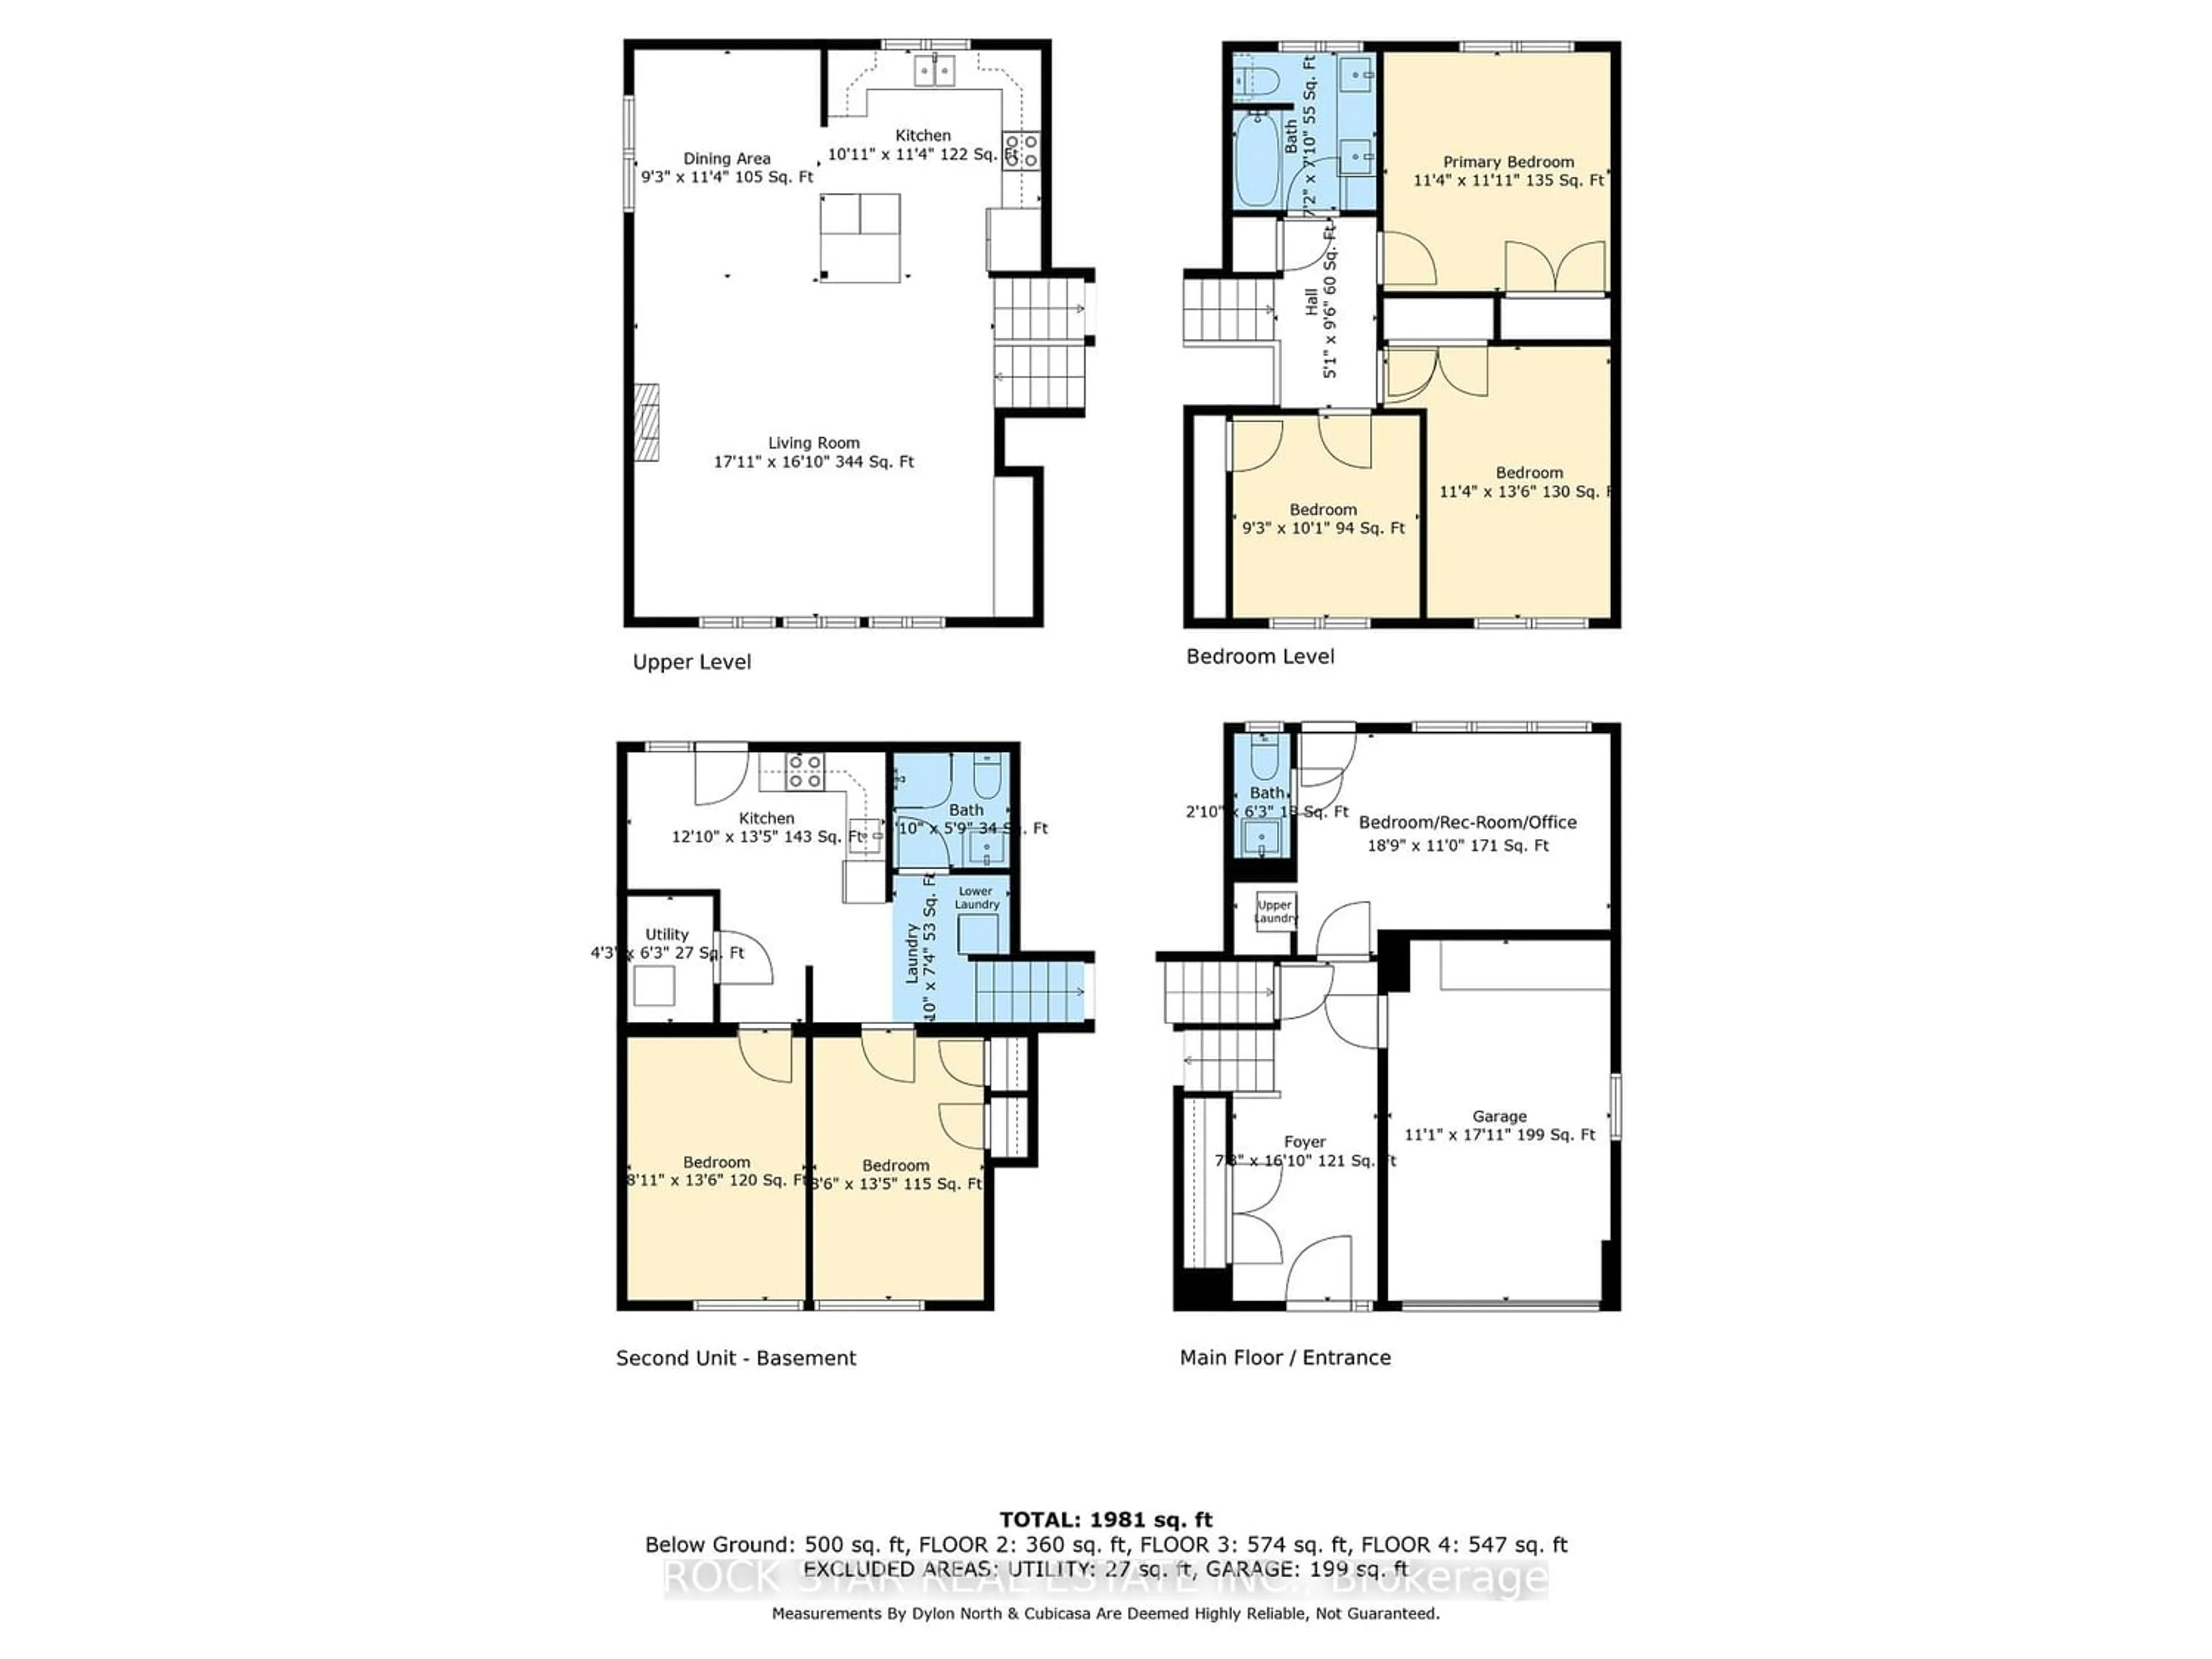 Floor plan for 857 Willowdale Ave, Toronto Ontario M2M 3B9